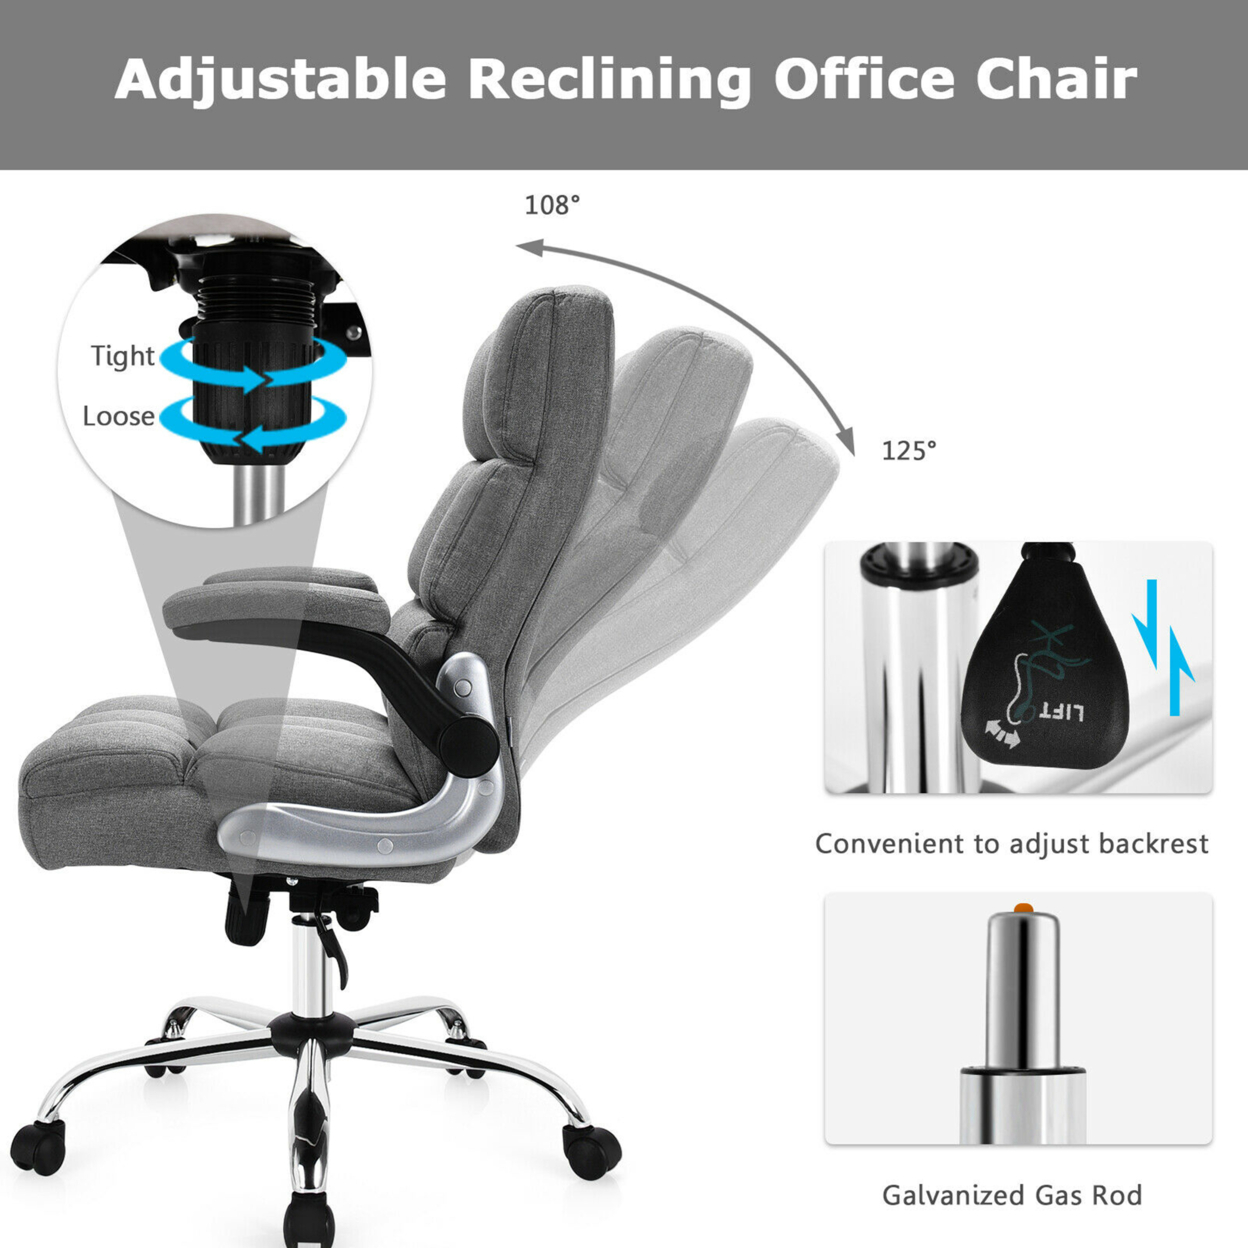 High Back Big & Tall Office Chair Adjustable Swivel W/Flip-up Arm - Grey